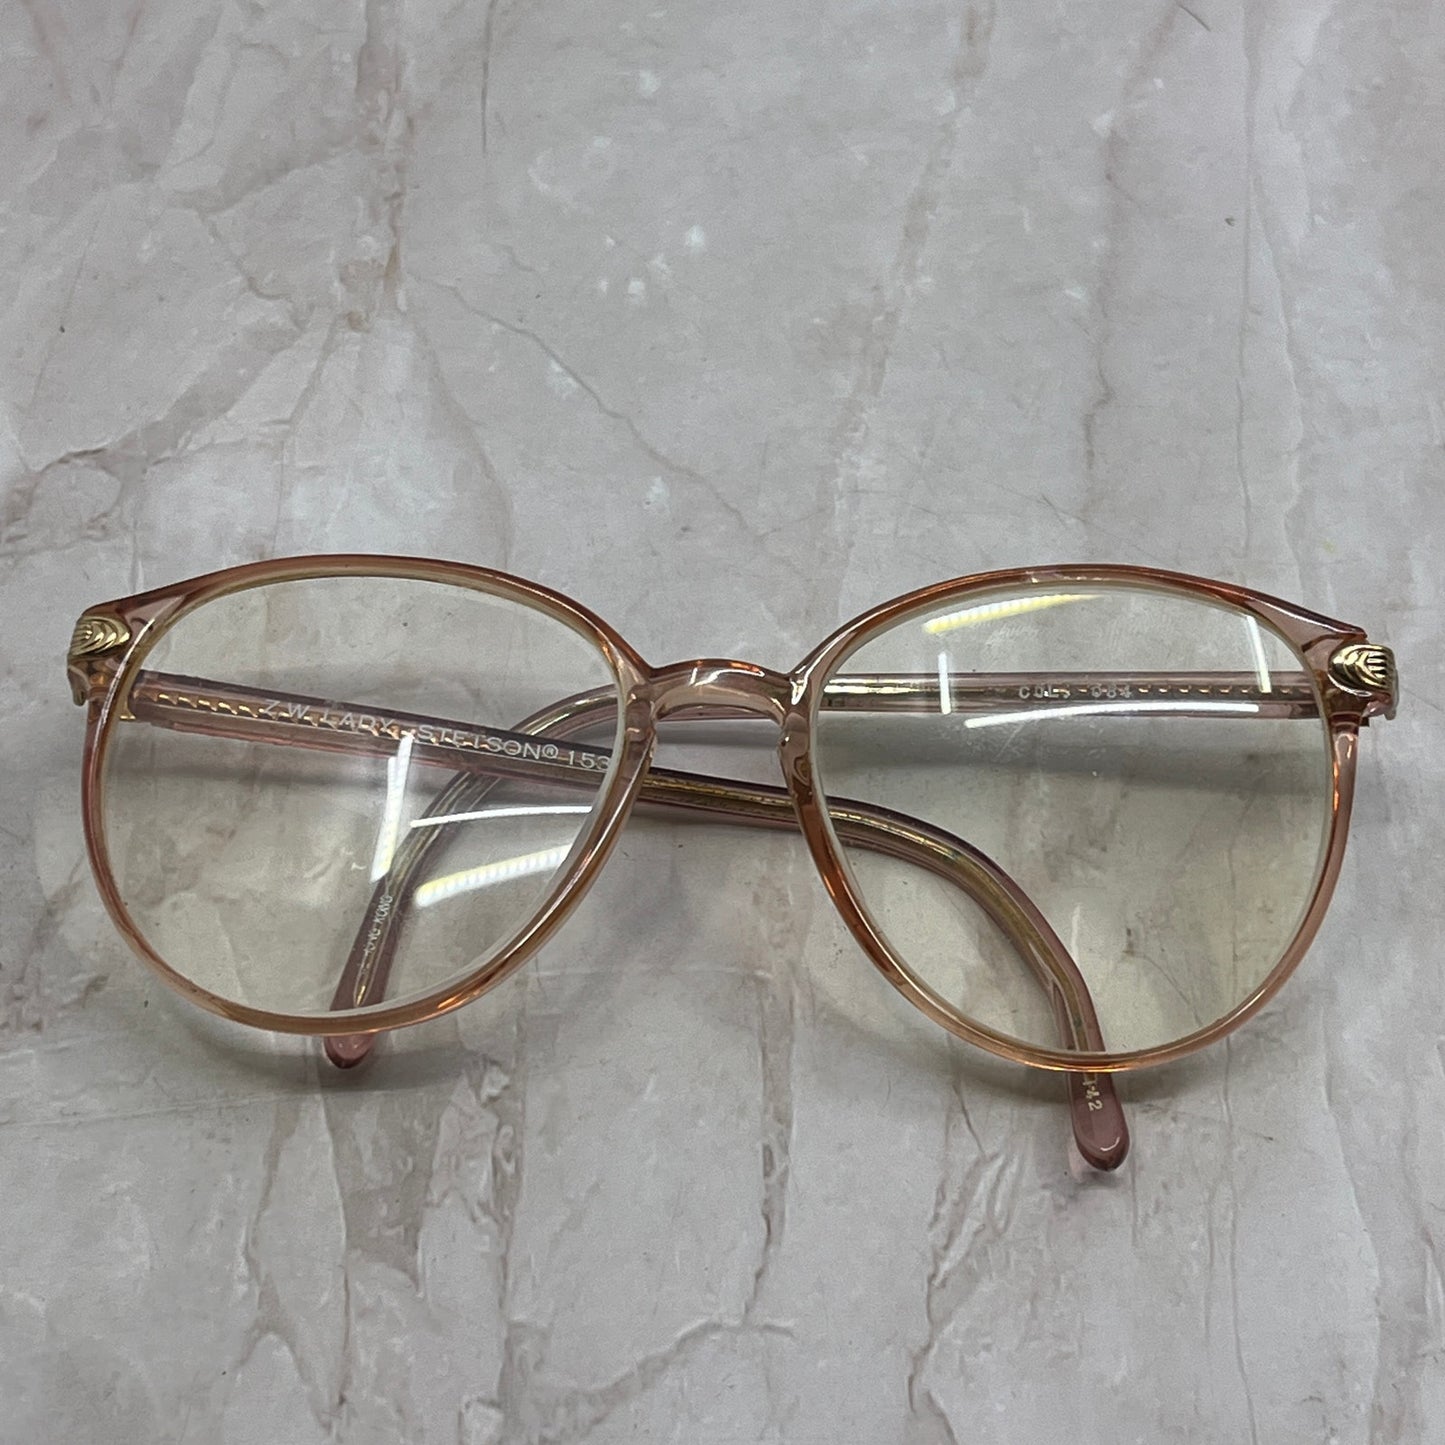 Retro Women's Z.W. Lady Stetson 153 Sunglasses Eyeglasses Frames TG7-G1-10